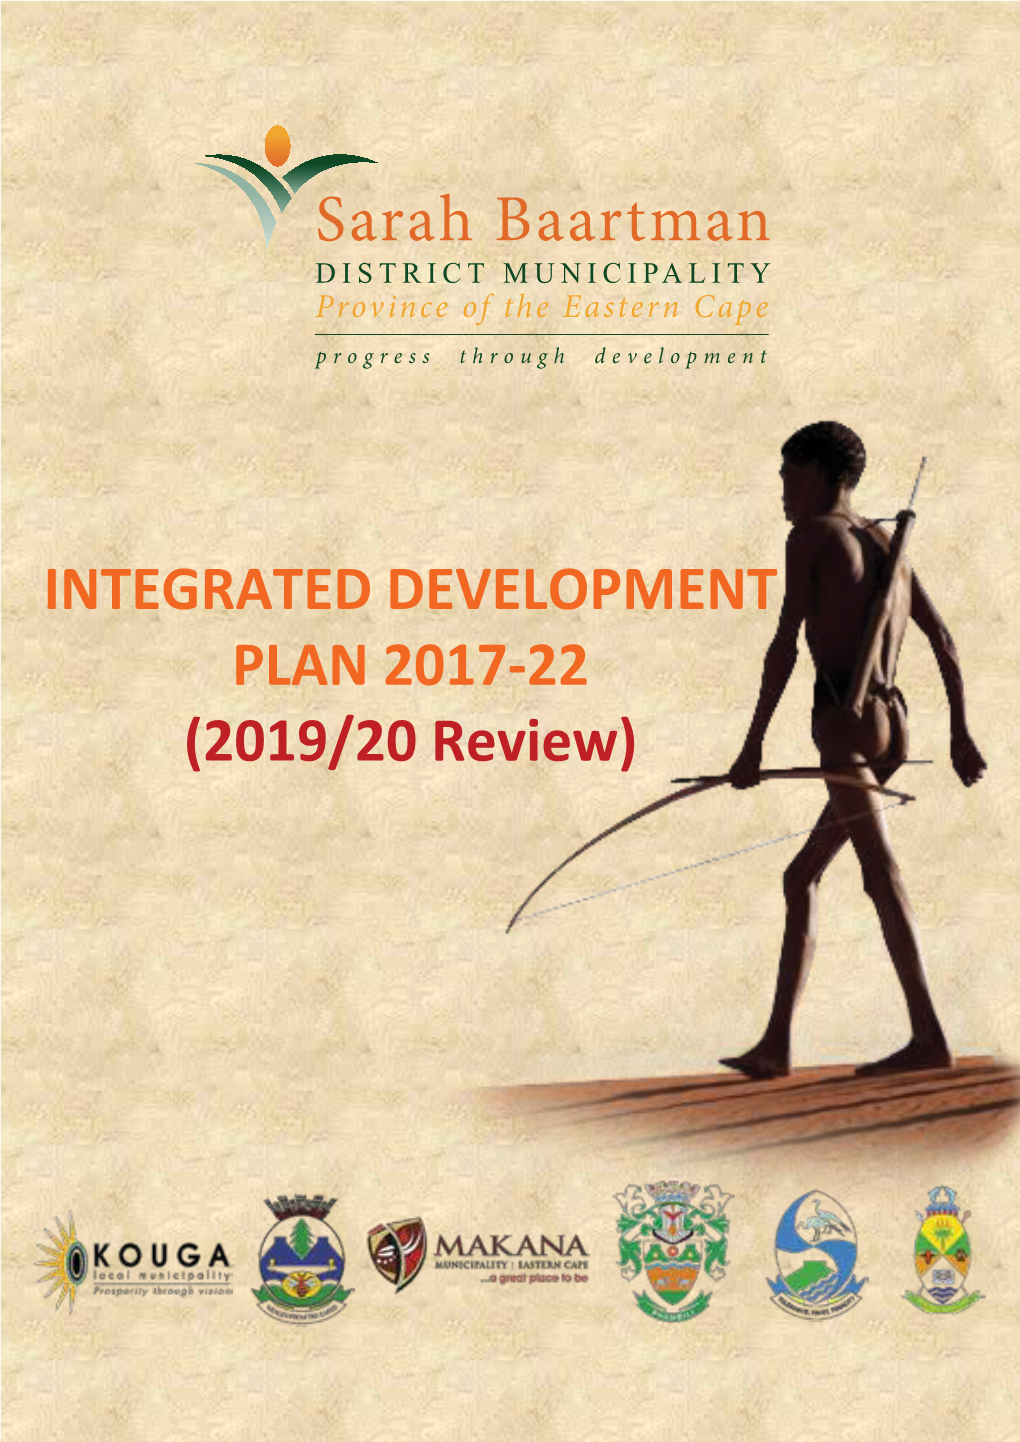 INTEGRATED DEVELOPMENT PLAN 2017-22 (2019/20 Review) Integrated Development Plan 2017-2022 Second Review 2019/2020 – Sarah Baartman District Municipality